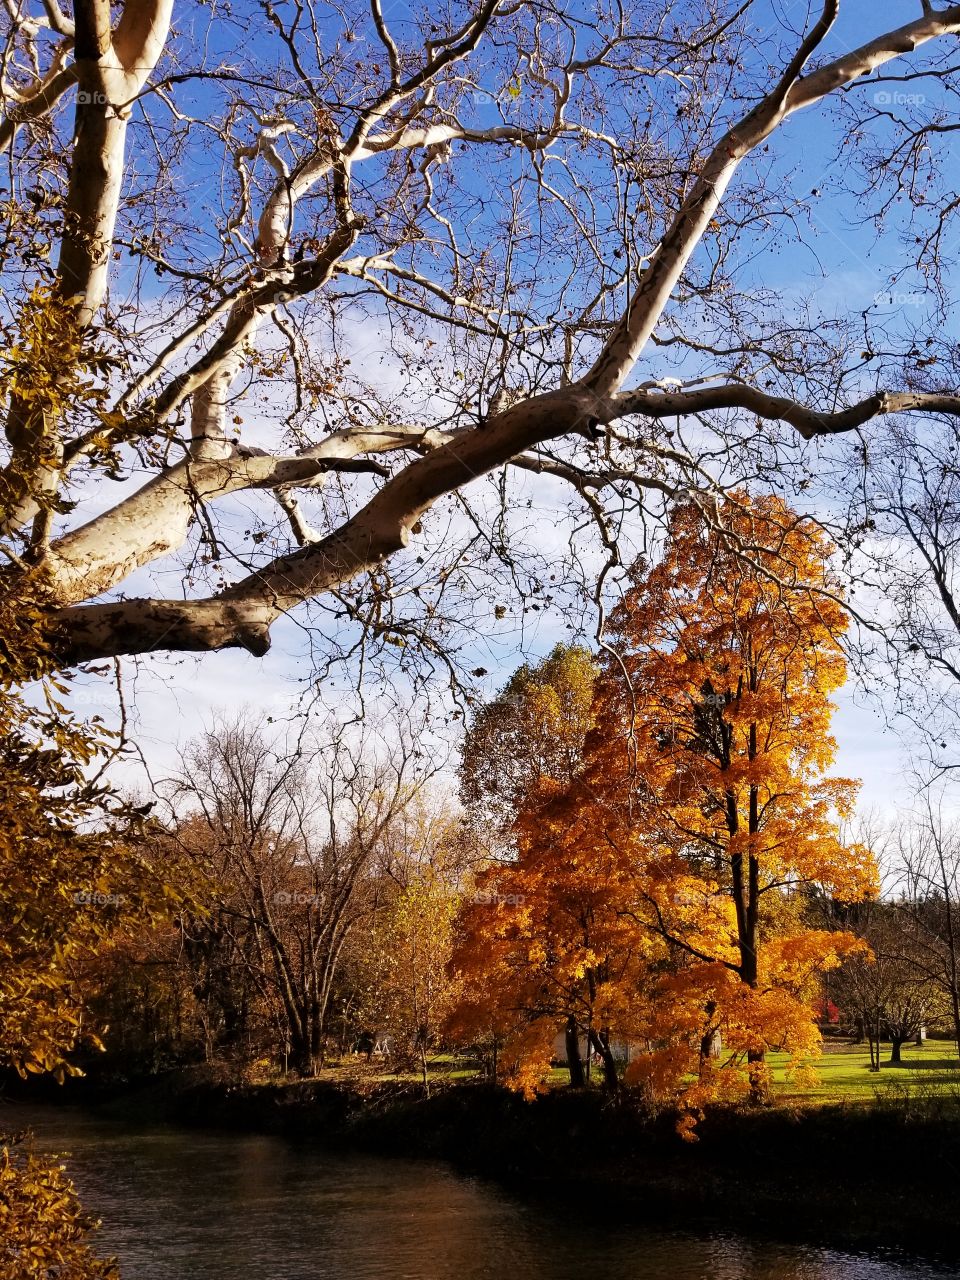 Fall colors in Western Pennsylvania